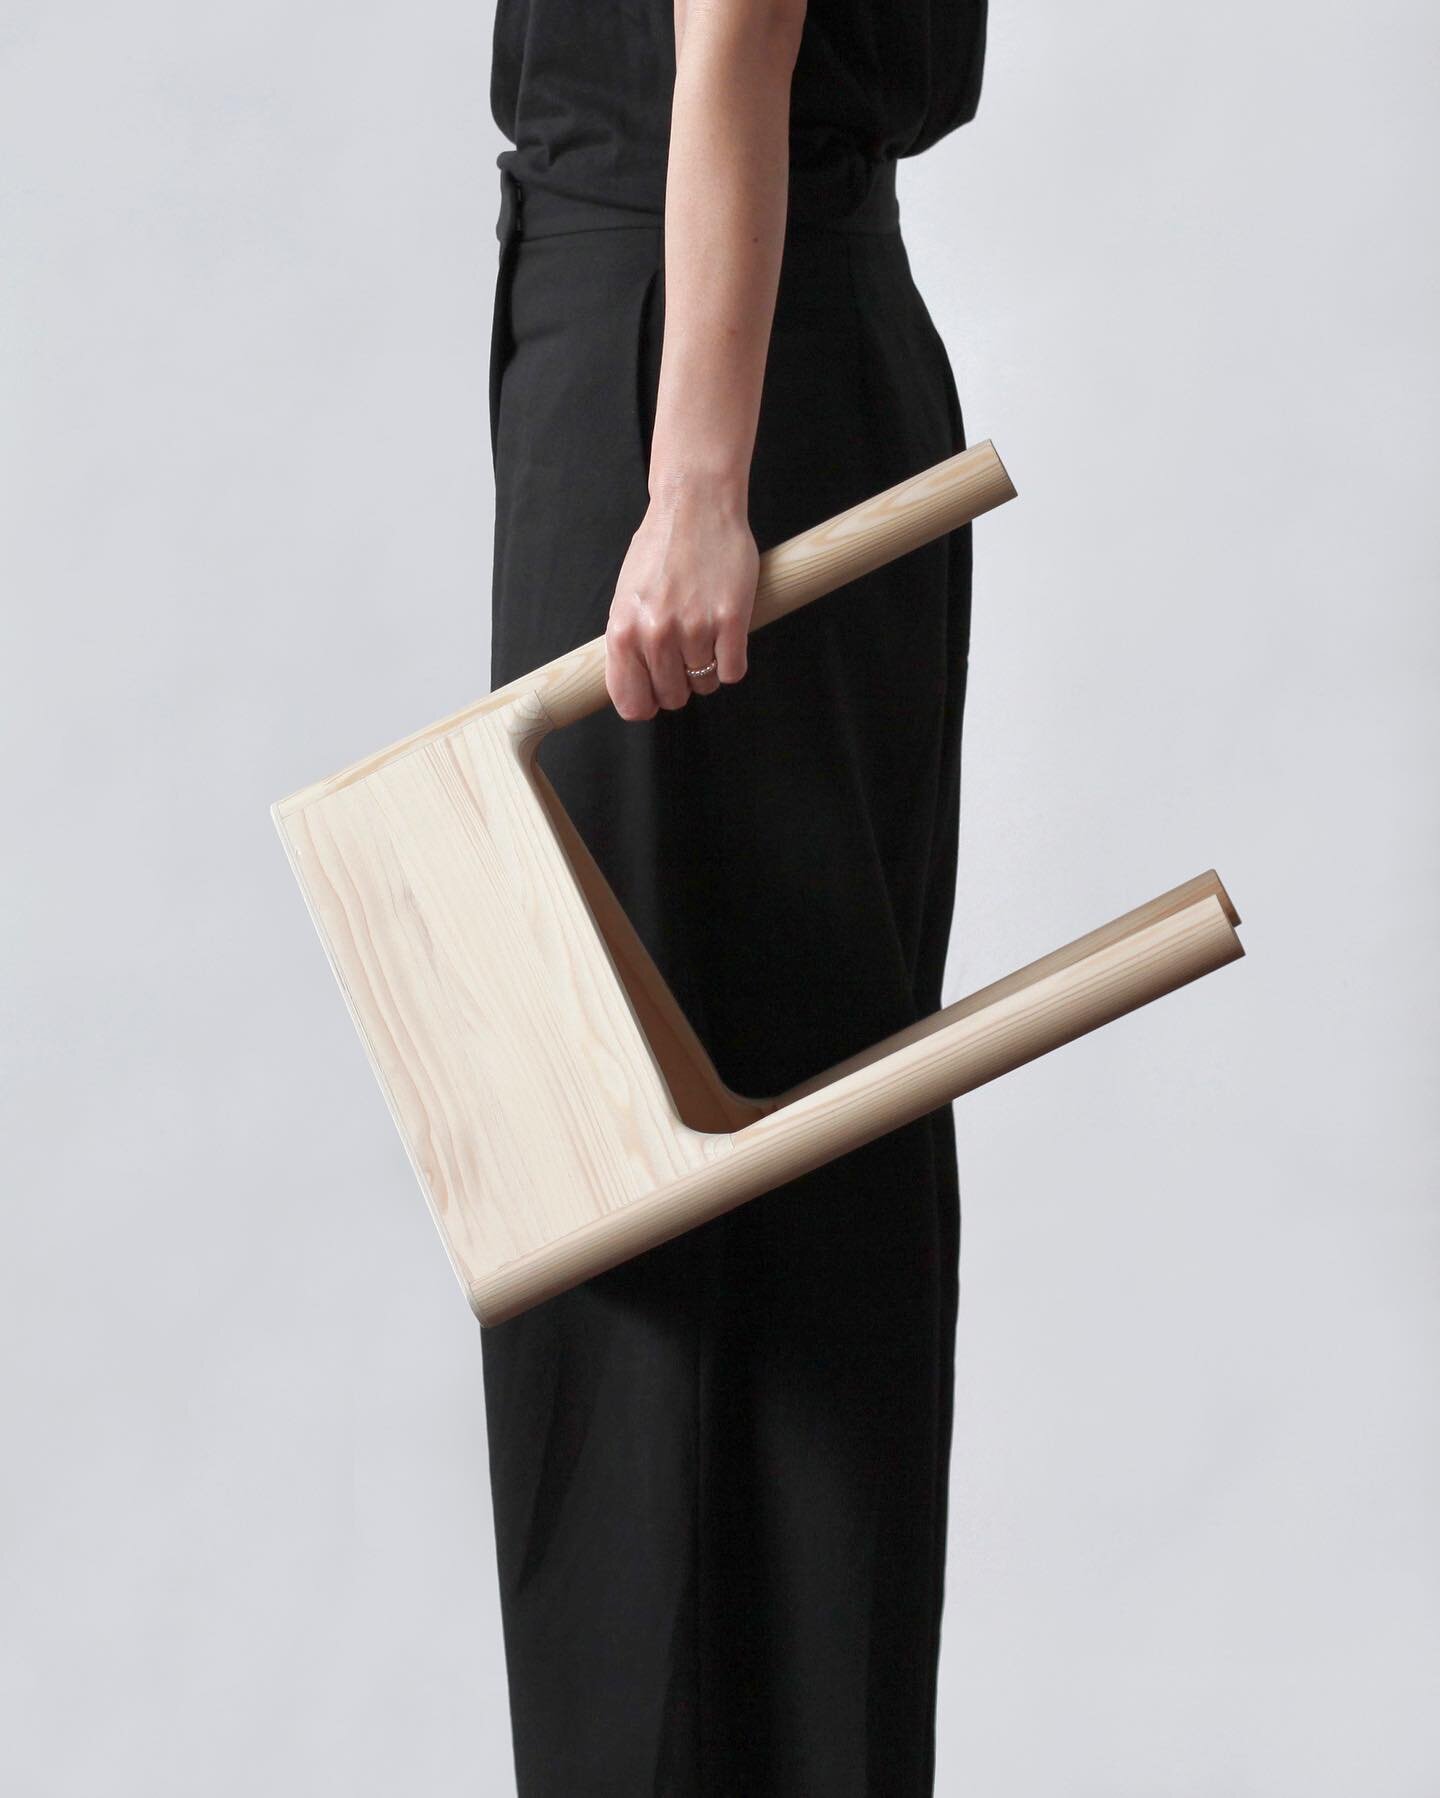 Three legged Stool #04

#stool #woodenstool #furniture #handcraft #woodworking #solidwood #plywood #seat #furnituredesign #productdesign #design #ac_al_studio